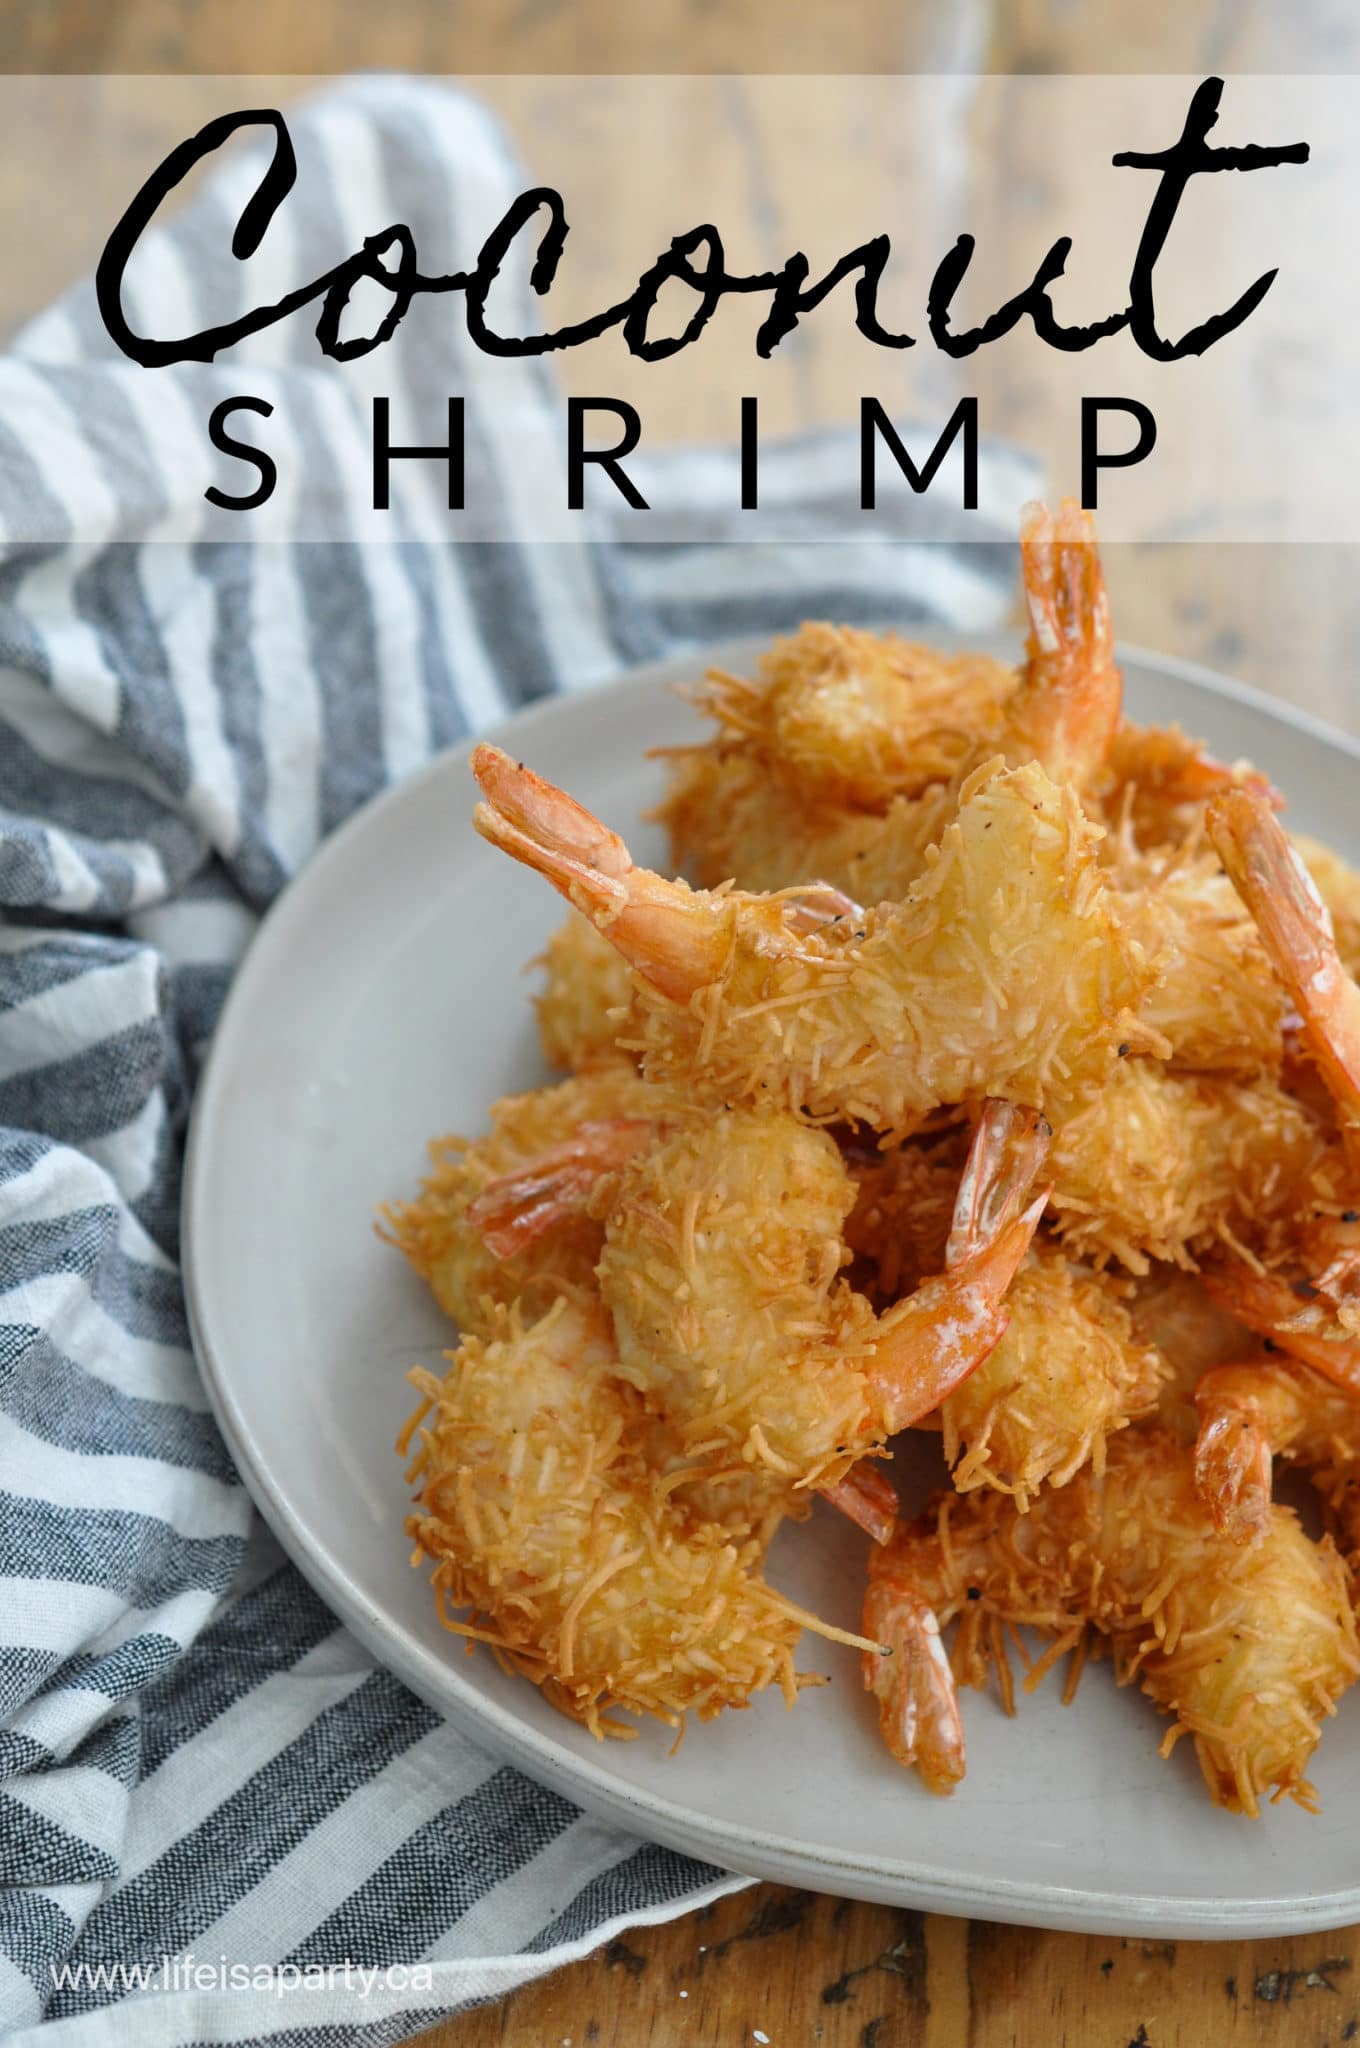 Coconut Shrimp Recipe - Life is a Party